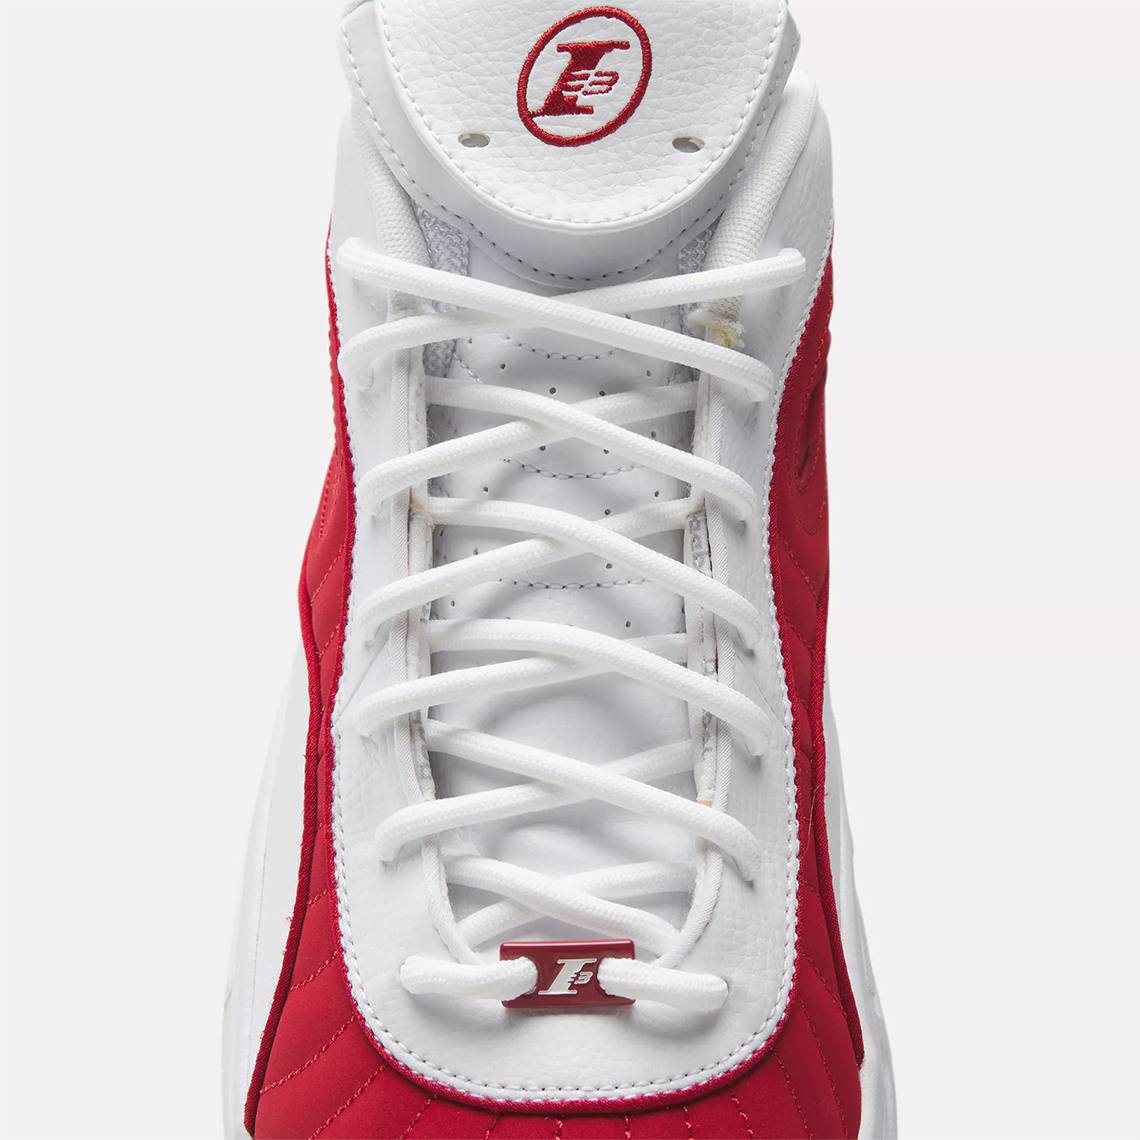 Reebok Sneakers Answer 3 Retro White Flash Red 100070300 4